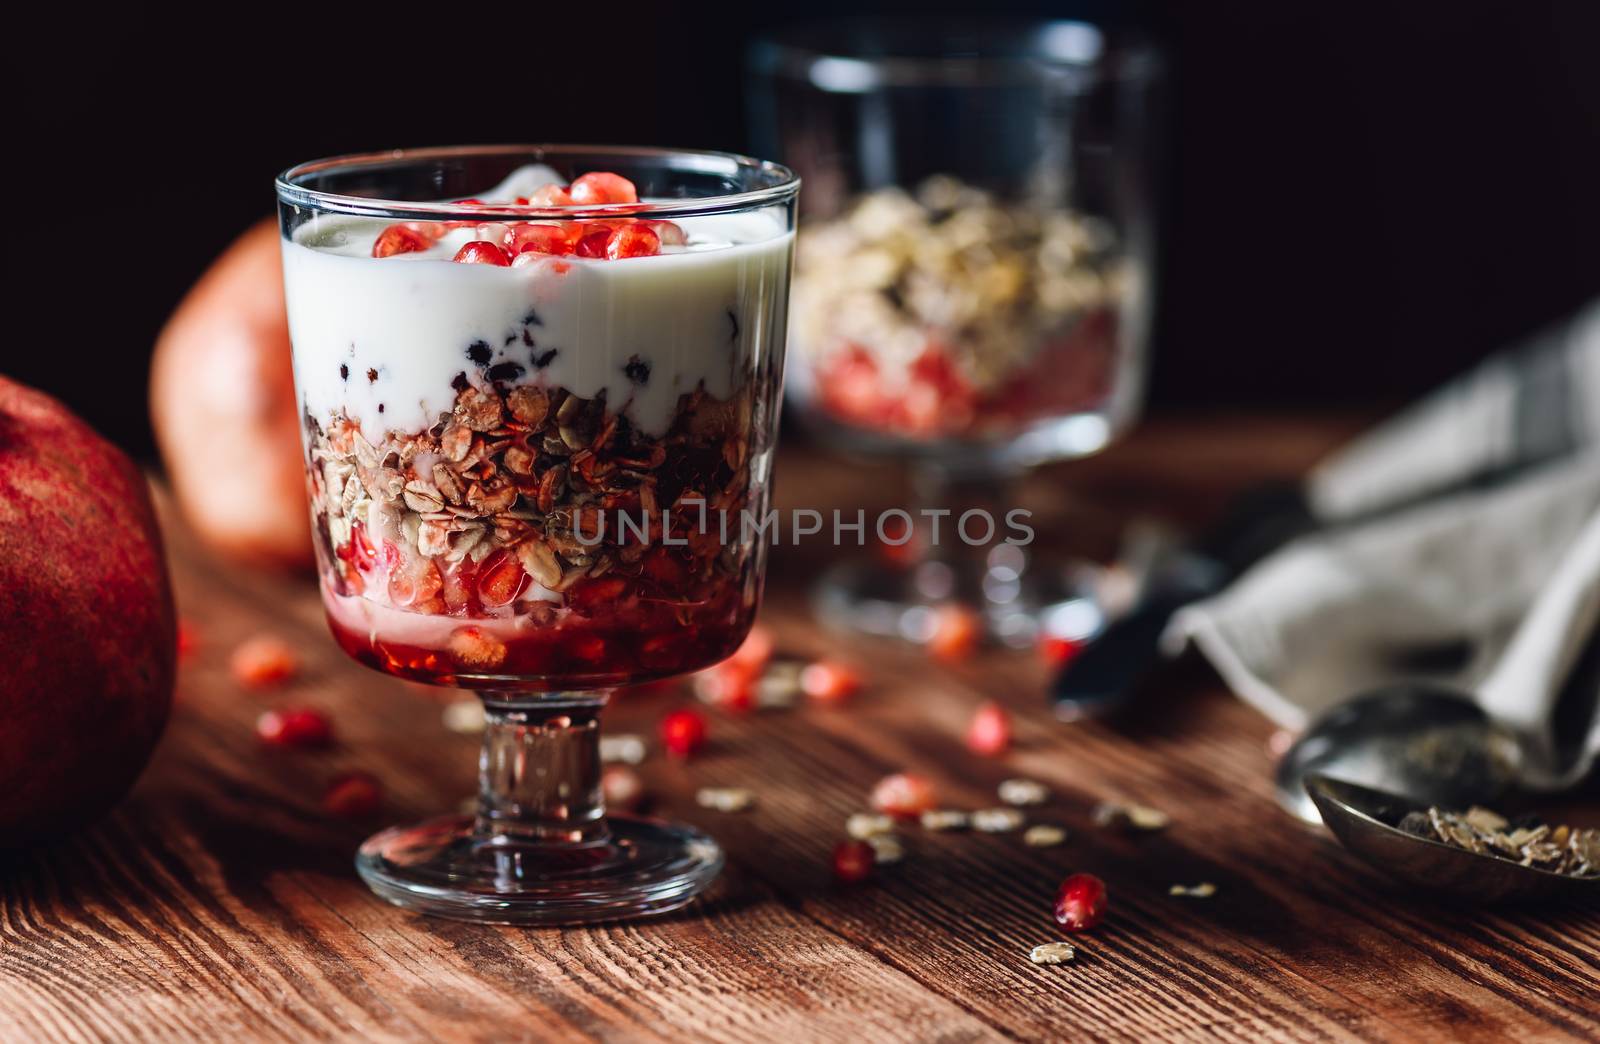 Pomegranate Parfait with Ingredients on Backdrop by Seva_blsv